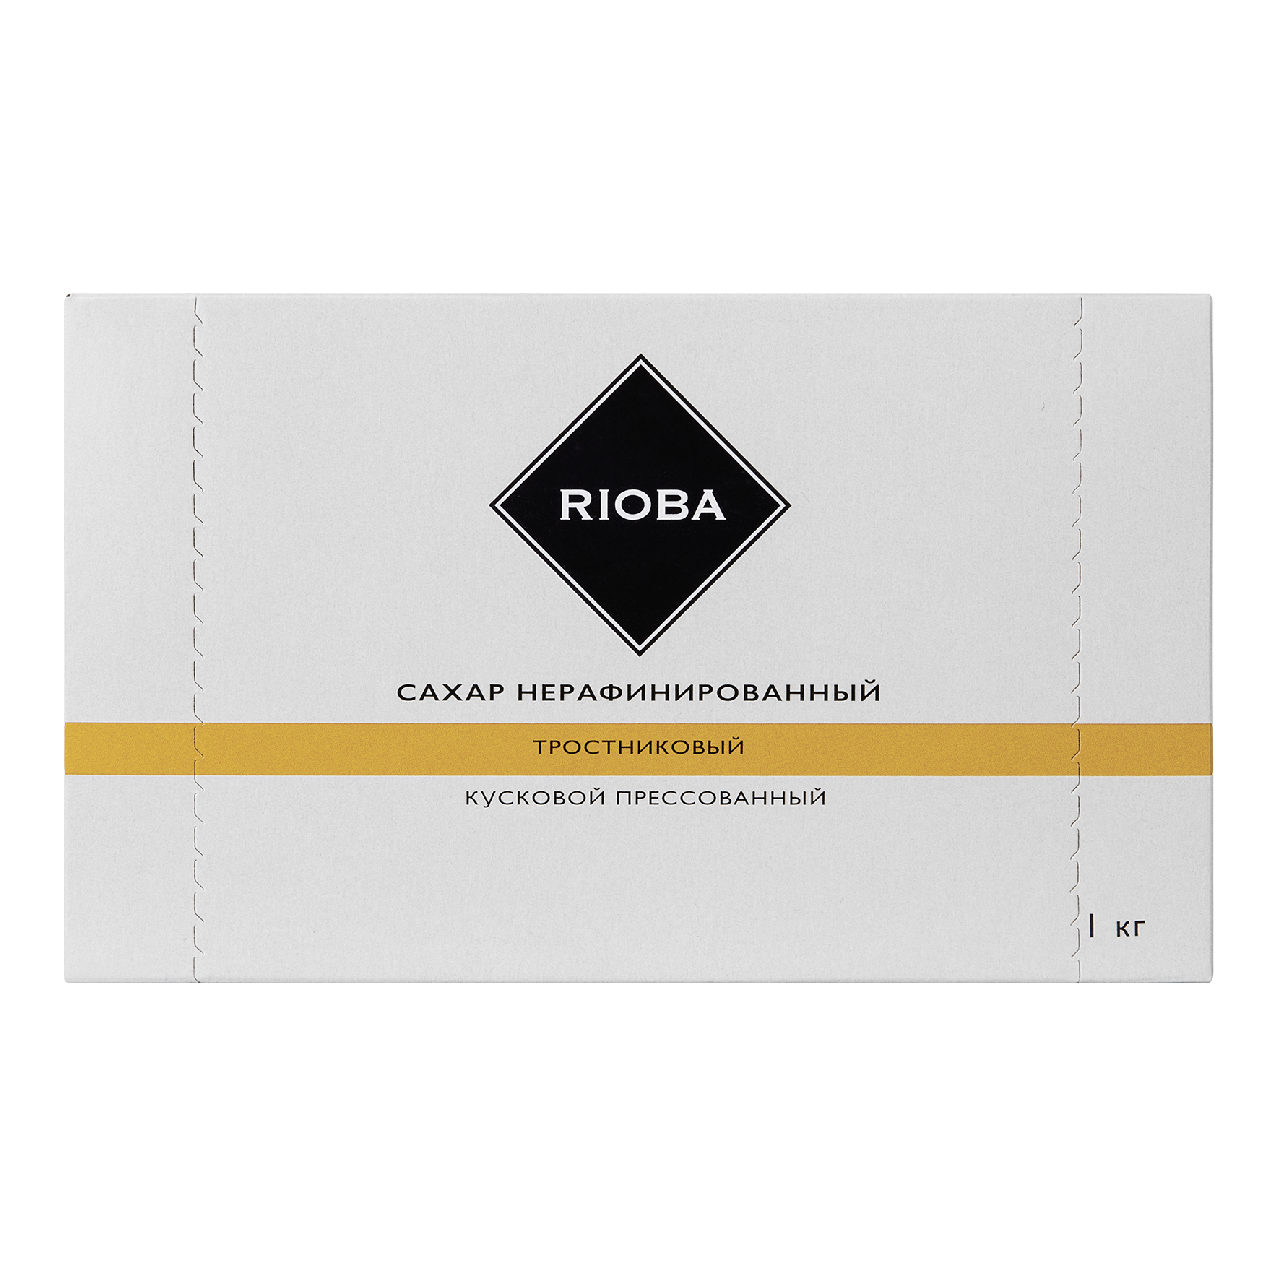 Rioba. Сахар Риоба тростниковый. Сахар тростниковый кусковой Rioba. Сахар кусковой Риоба коричневый. Rioba порционный сахар тростниковый.